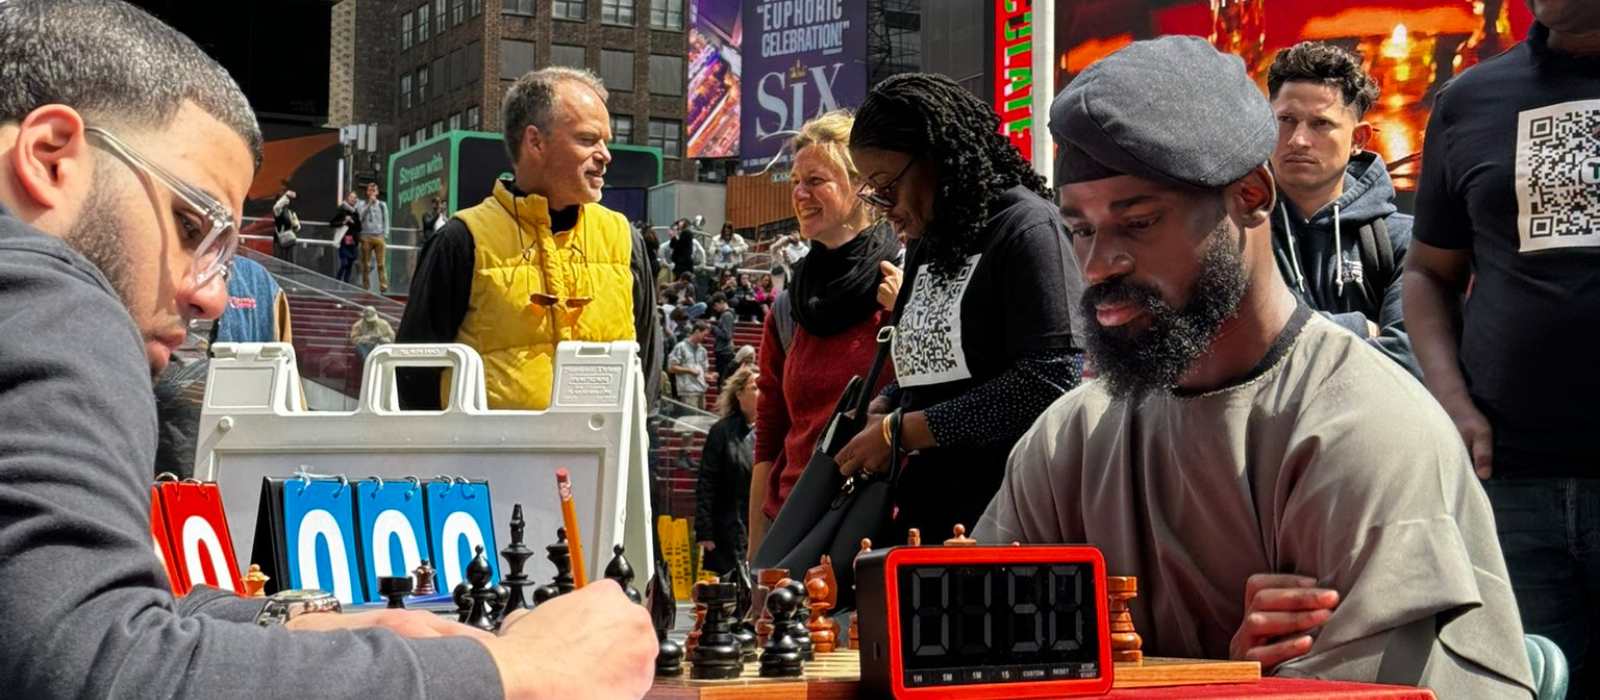 Nigerian chess master Tunde Onakoya smashes World Record in Times Square chess marathon